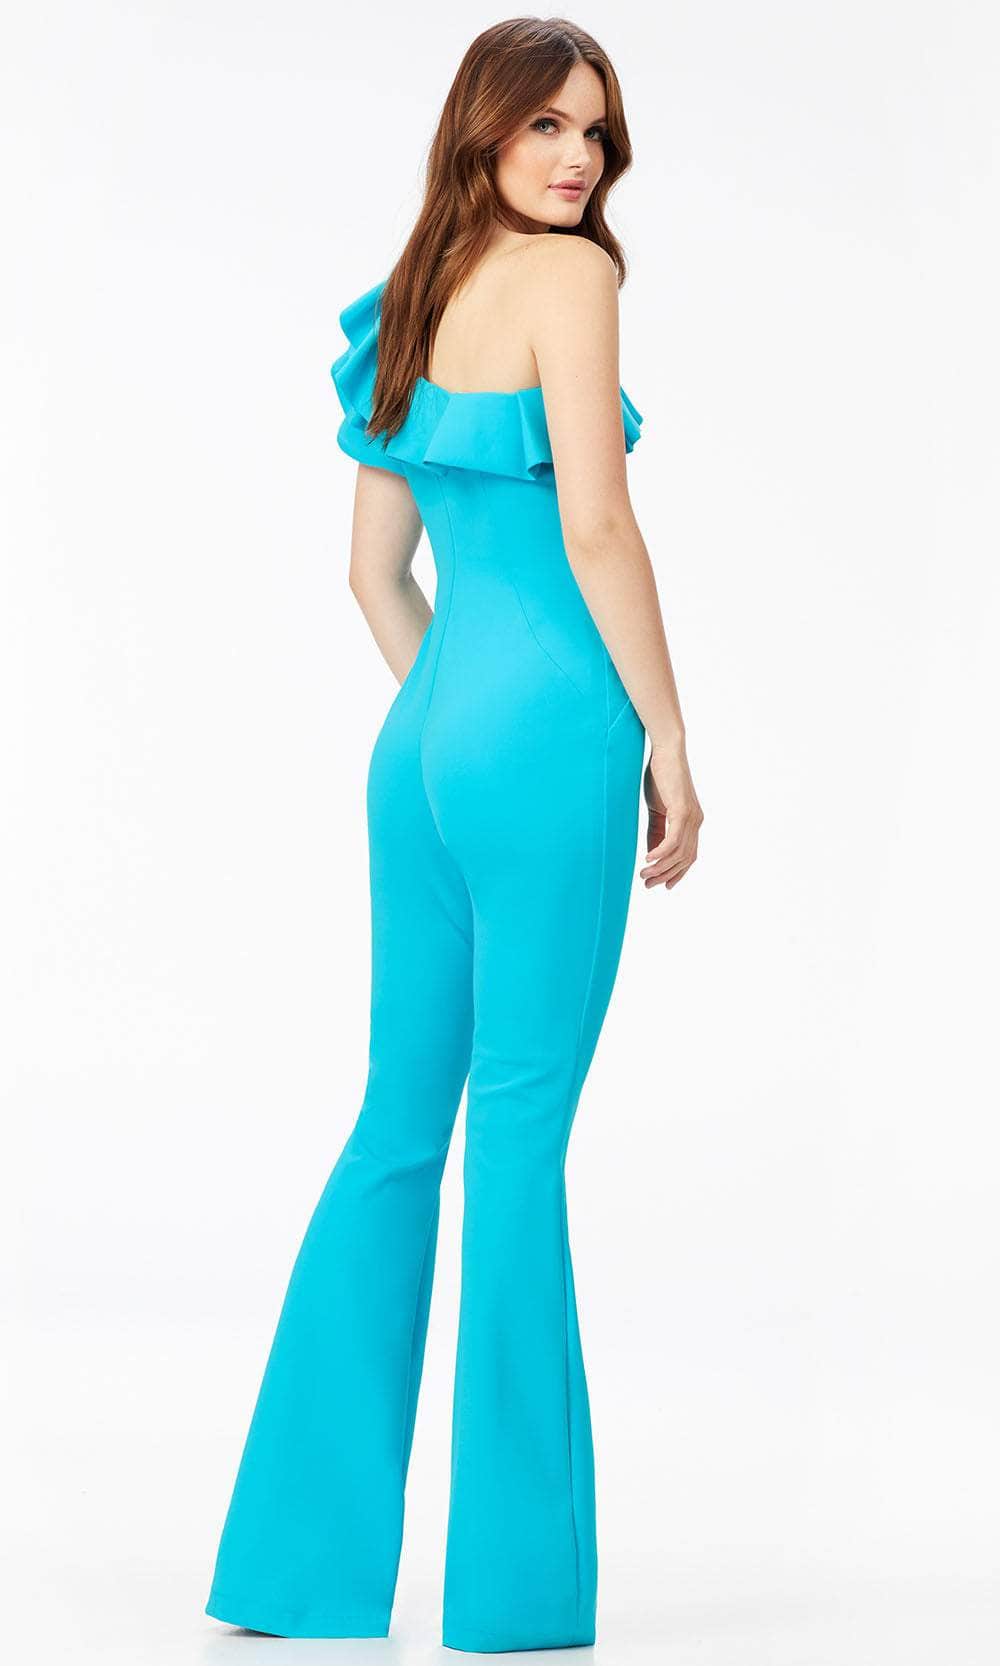 Ashley Lauren 11222 - Ruffled Asymmetric Jumpsuit Special Occasion Dress